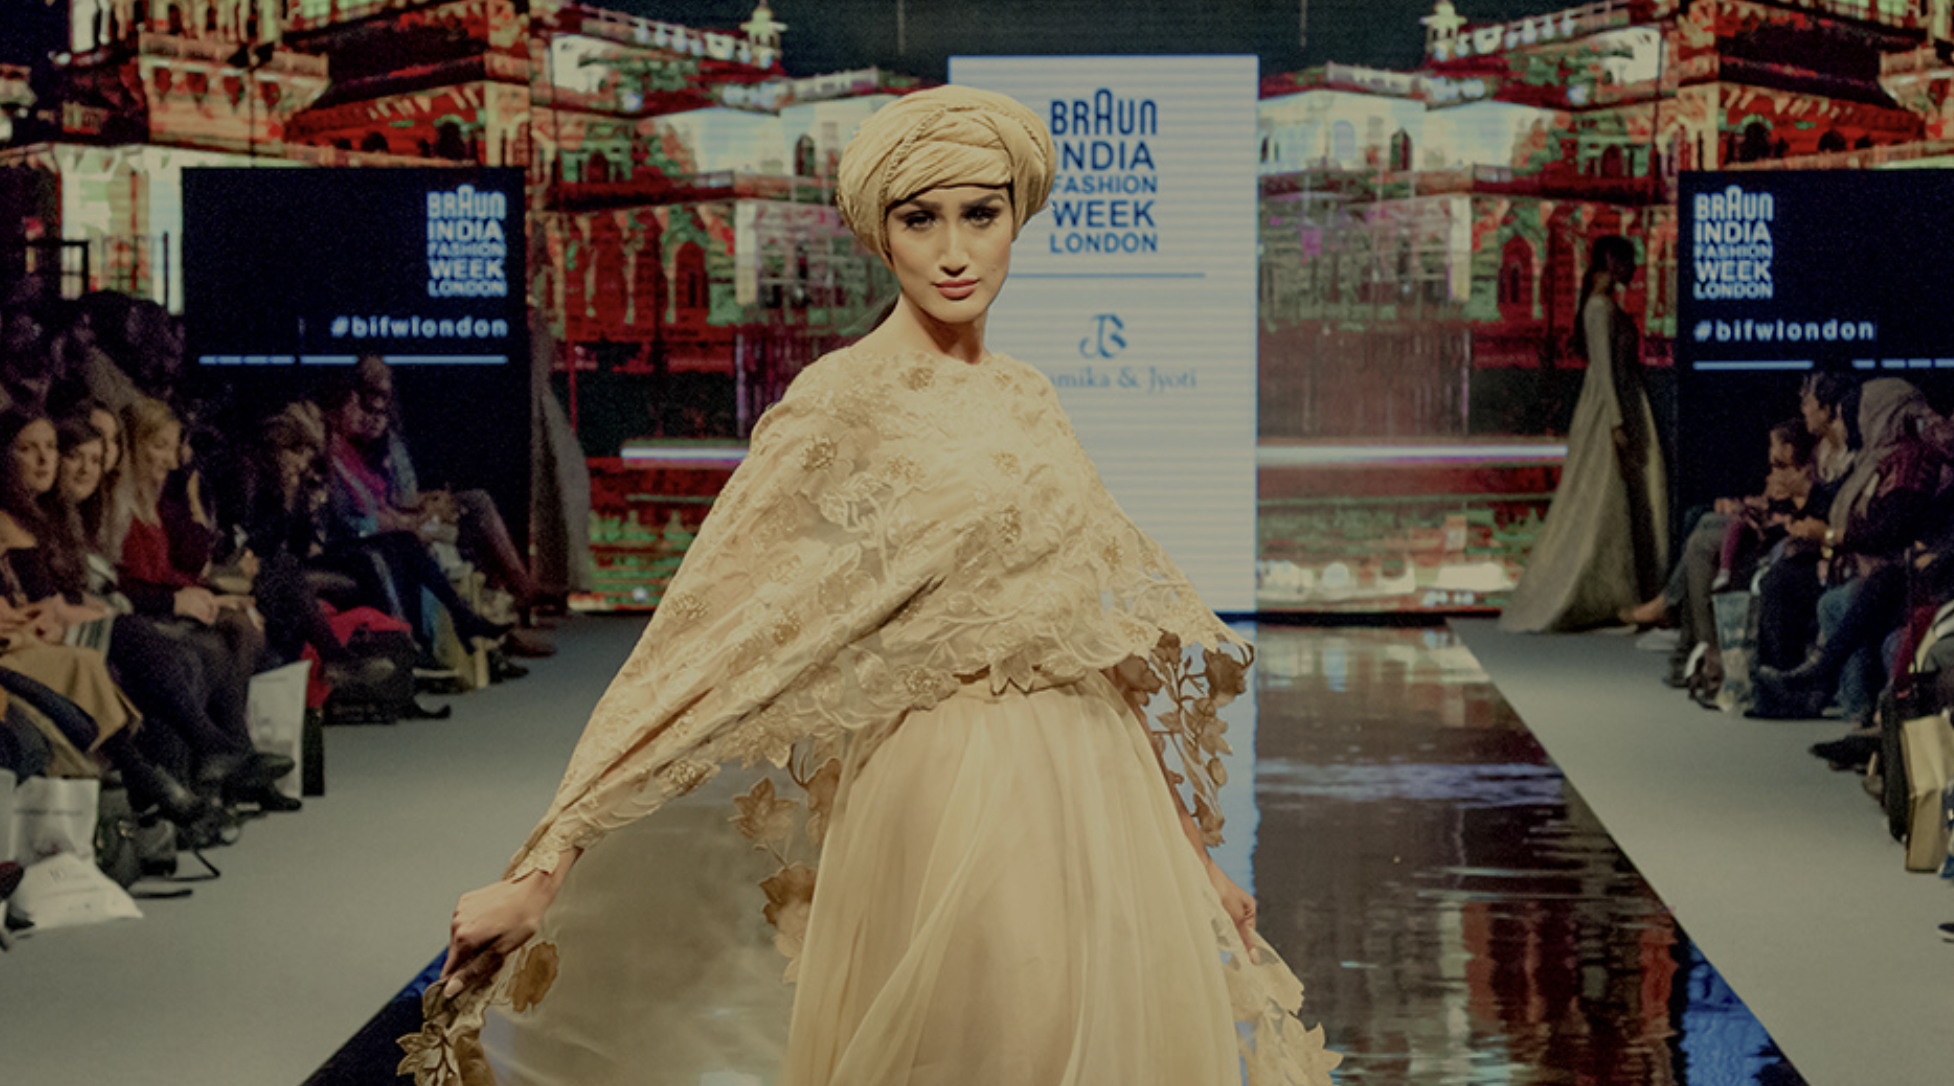 This November, India Fashion Week will return to London